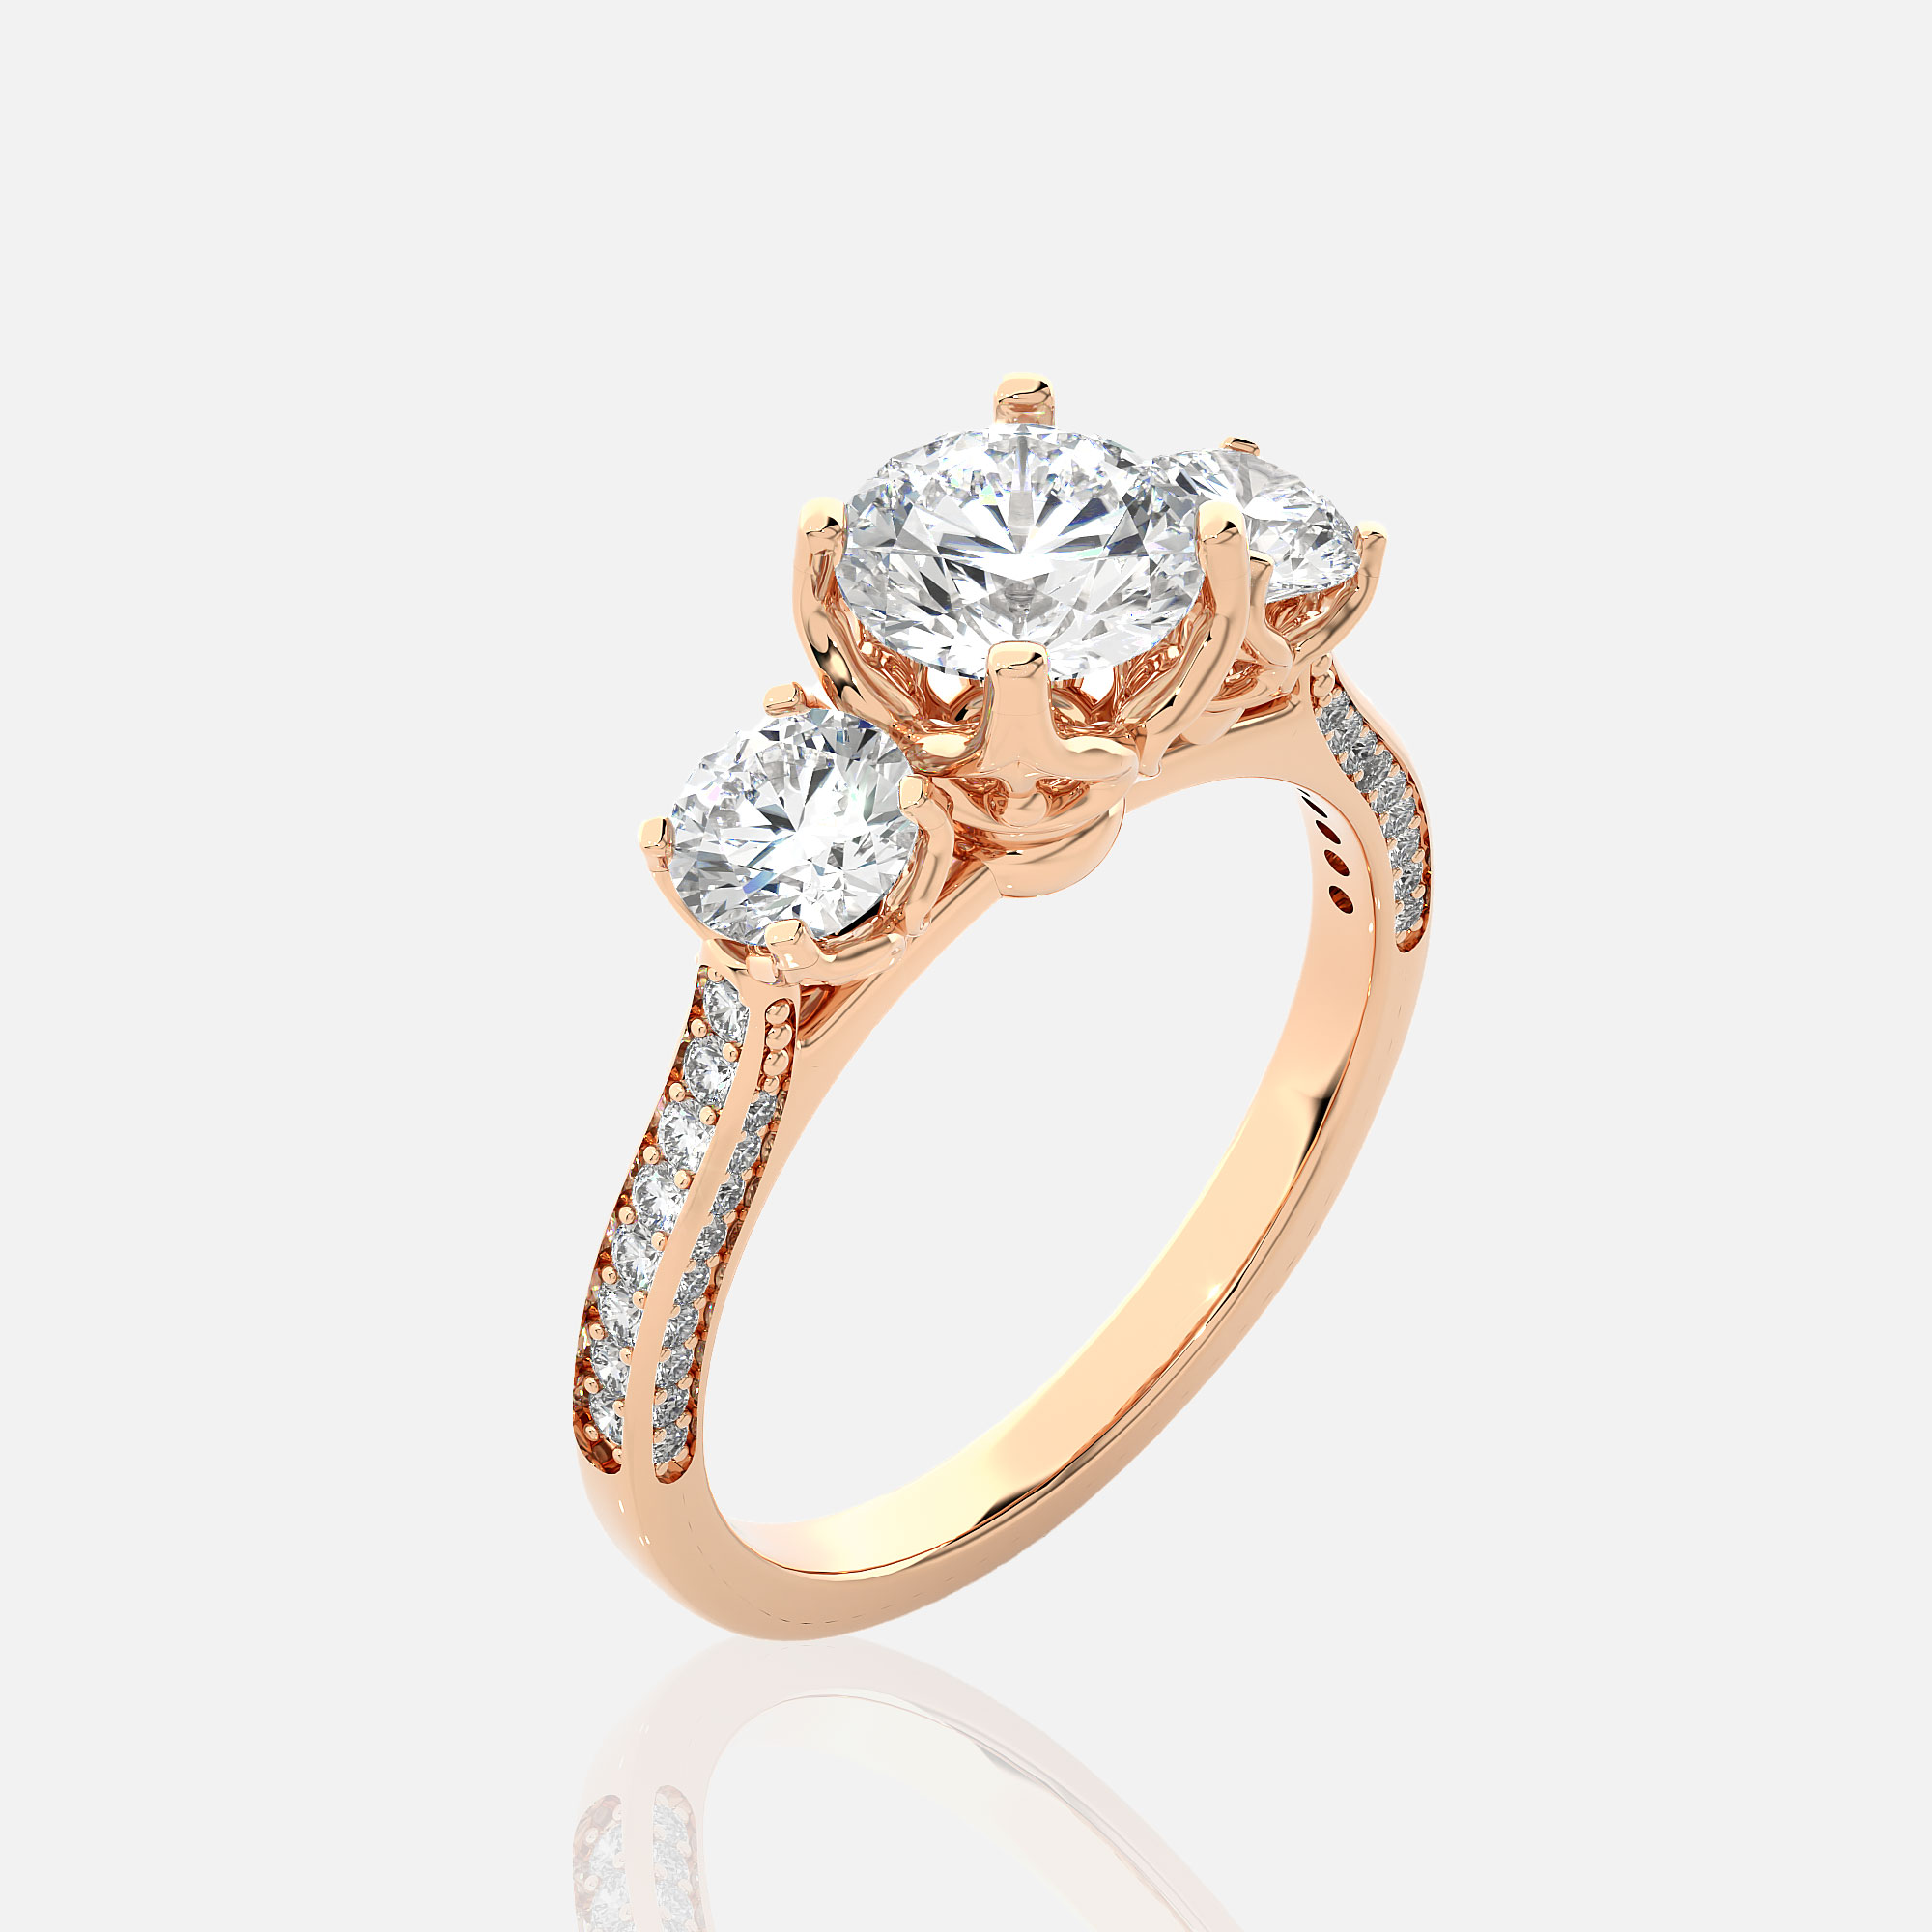 Elegant 2023 New Year Design Template with Luxury Diamond Engagement Ring.  Stock Illustration - Illustration of mockup, bride: 258280820